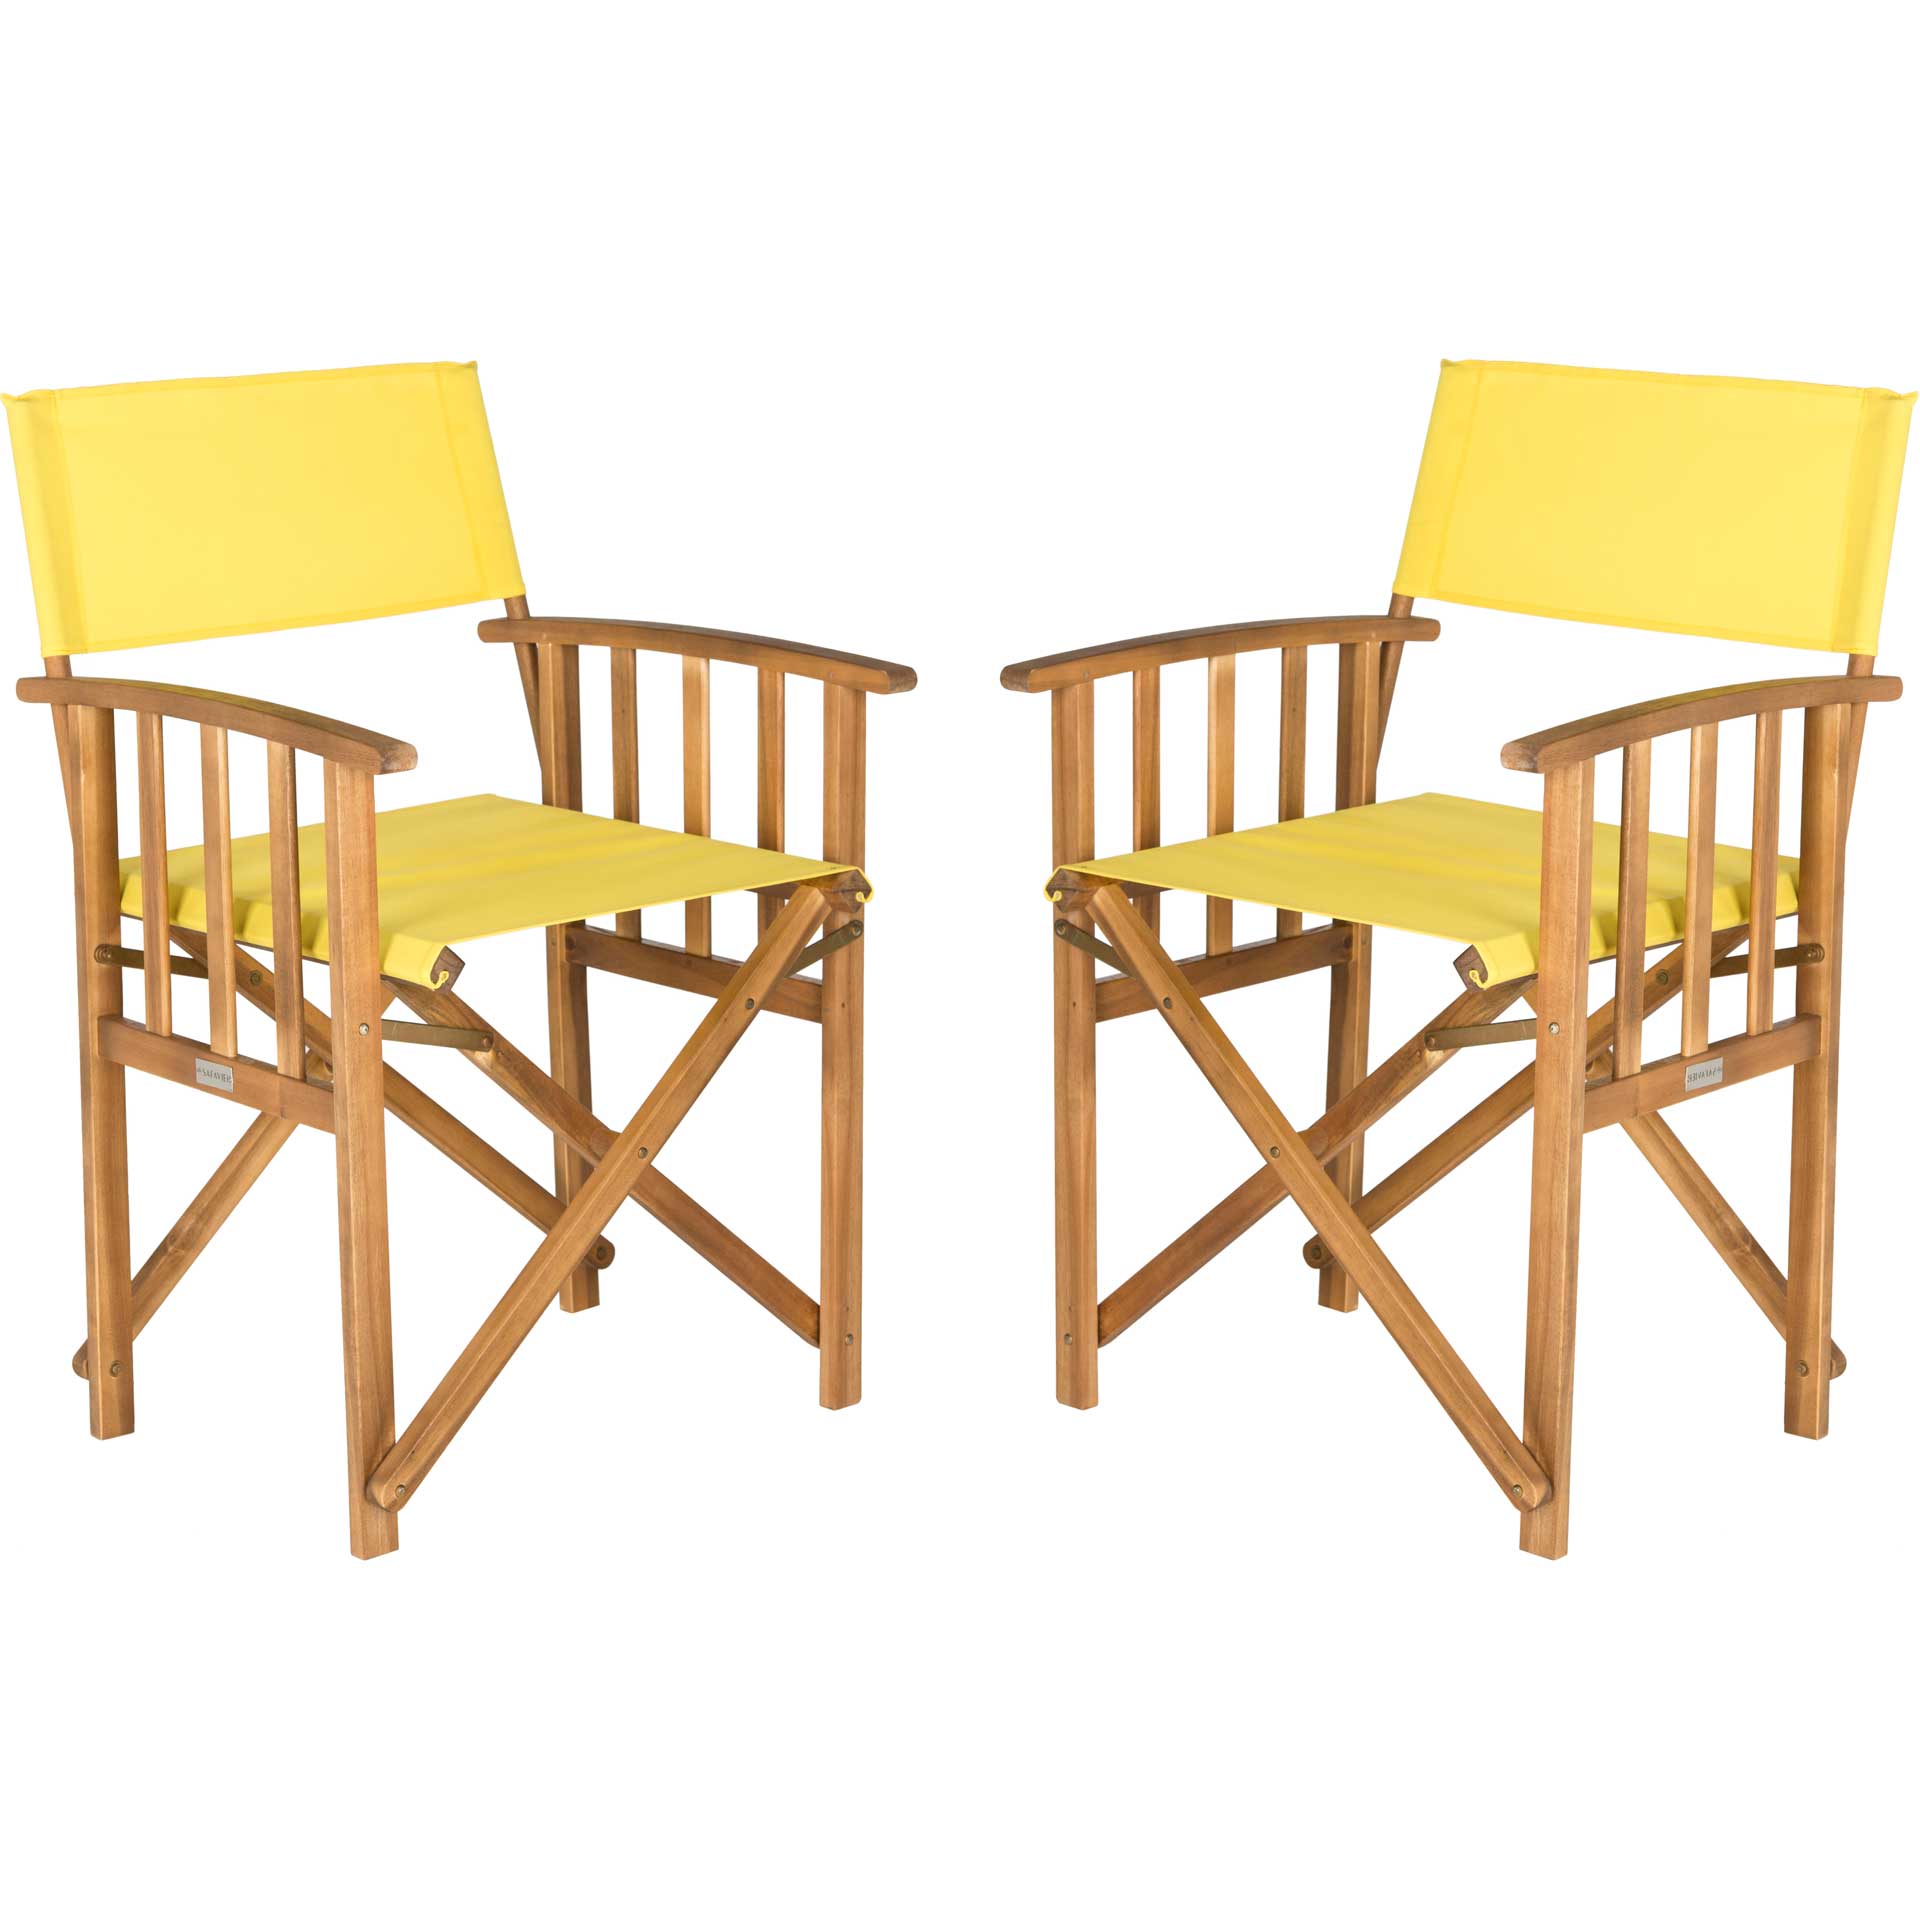 Lachlyn Director Chair Teak/Yellow (Set of 2)